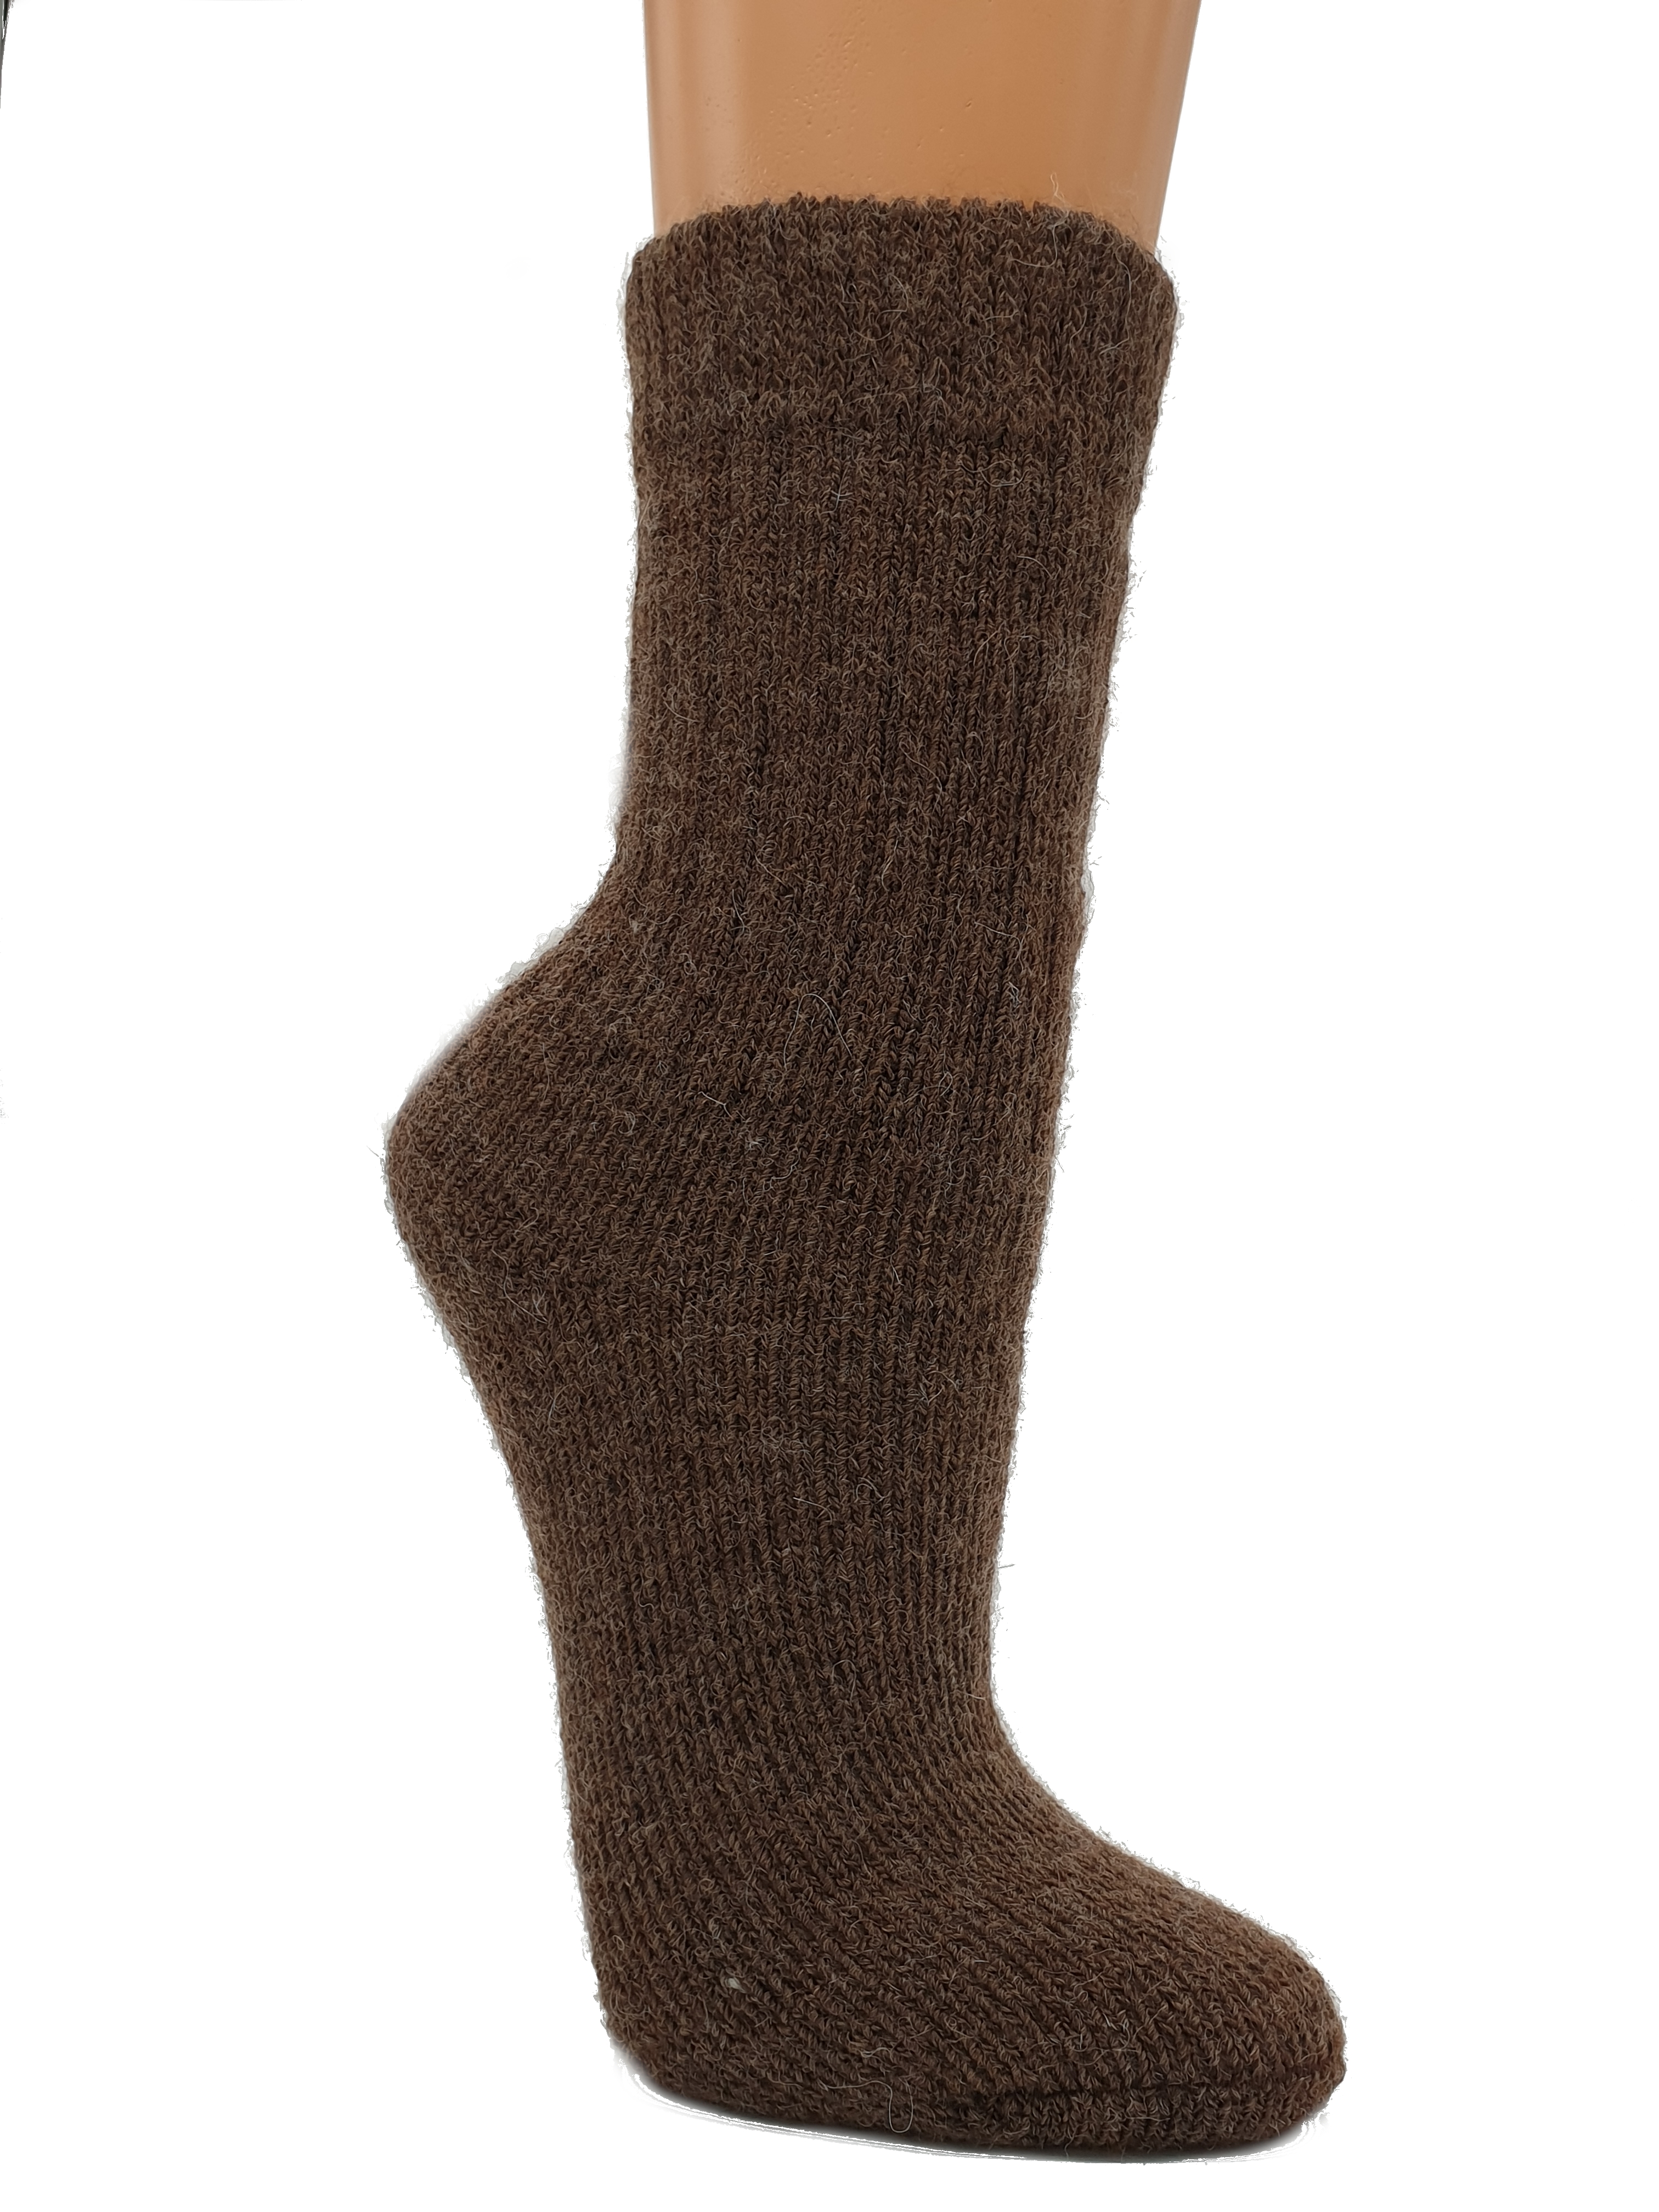 Alpaka-Socken für den Winter extra-warm